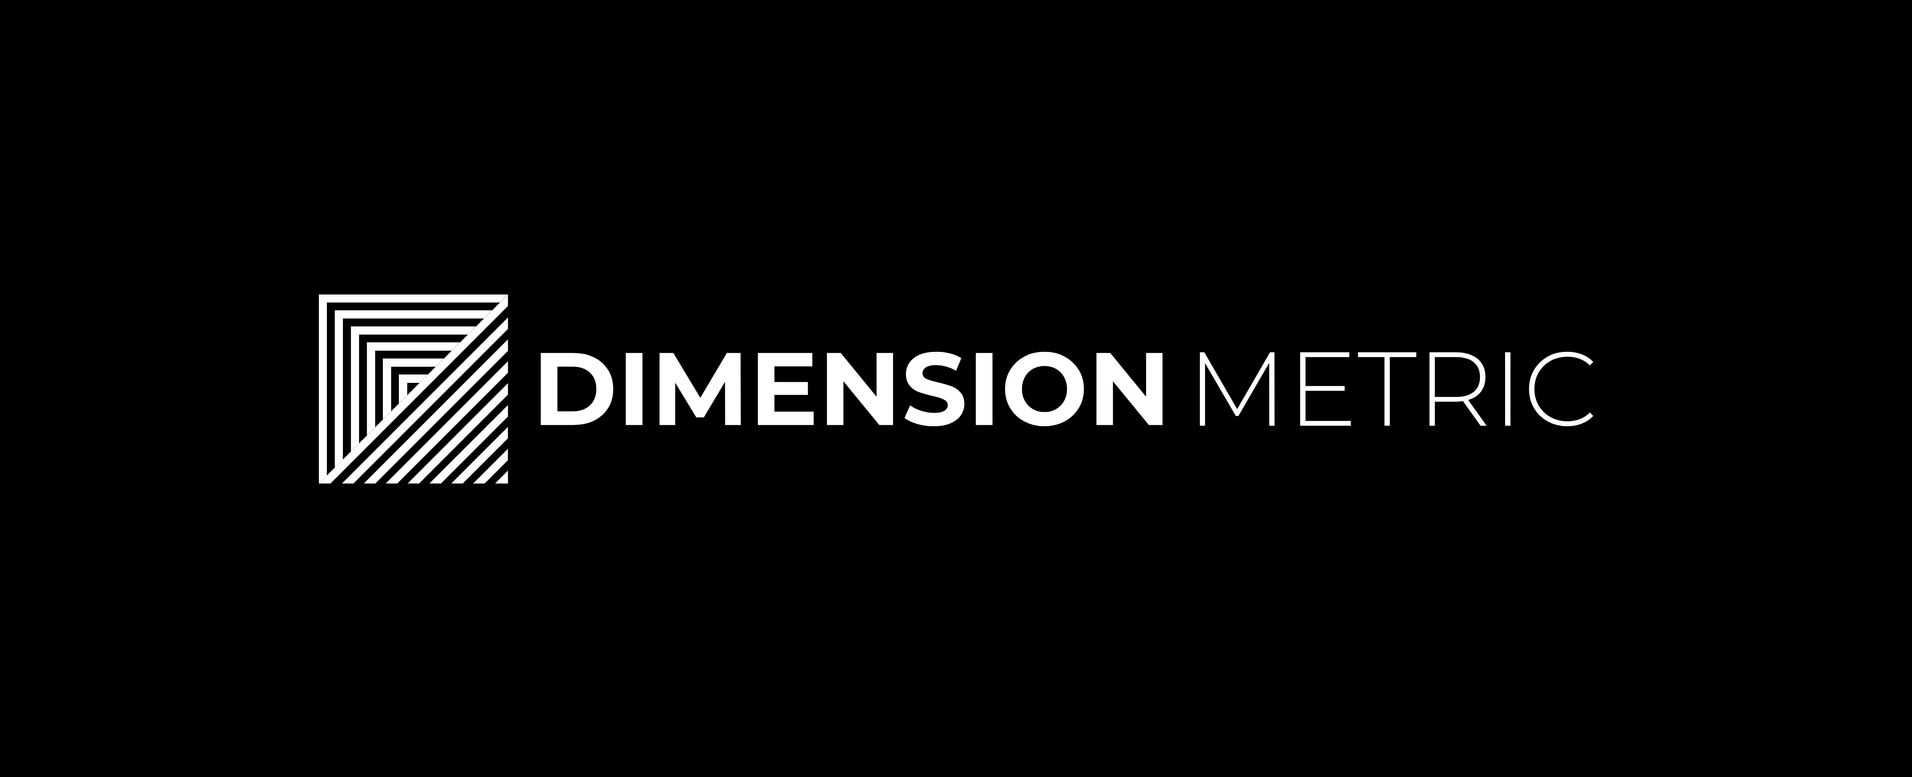 Dimension Metric Banner image